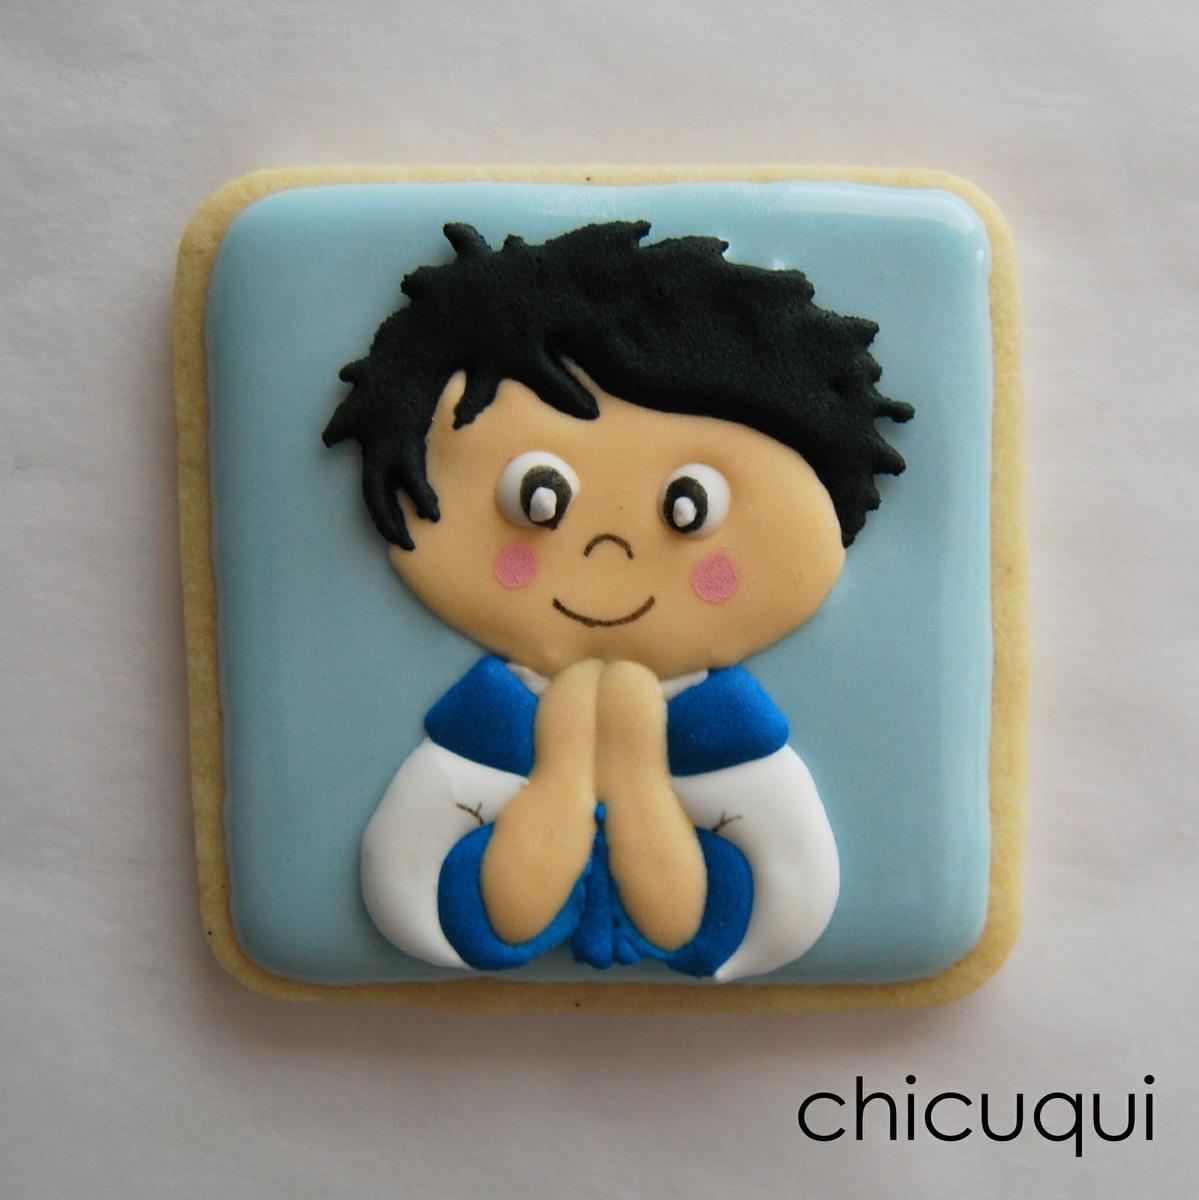 Comunión galletas decoradas niño chicuqui.com